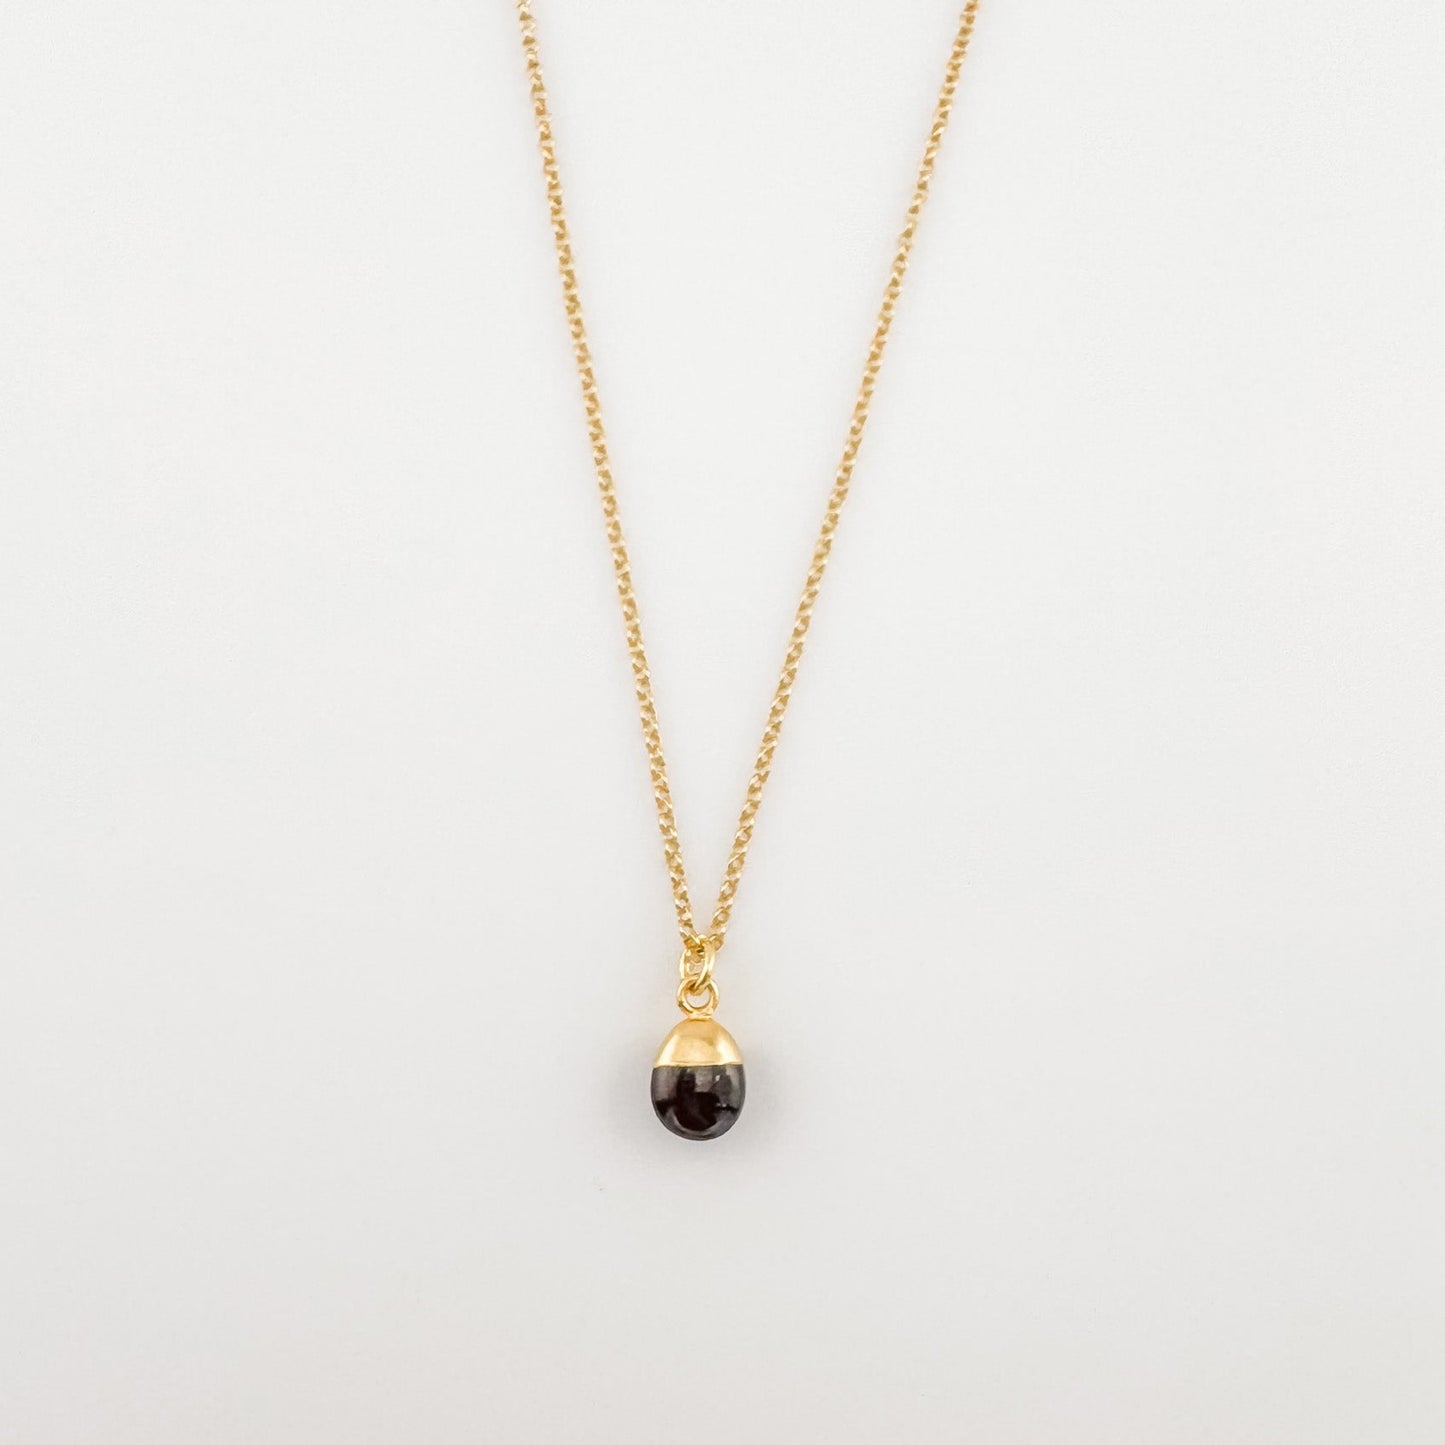 Garnet tumbled necklace